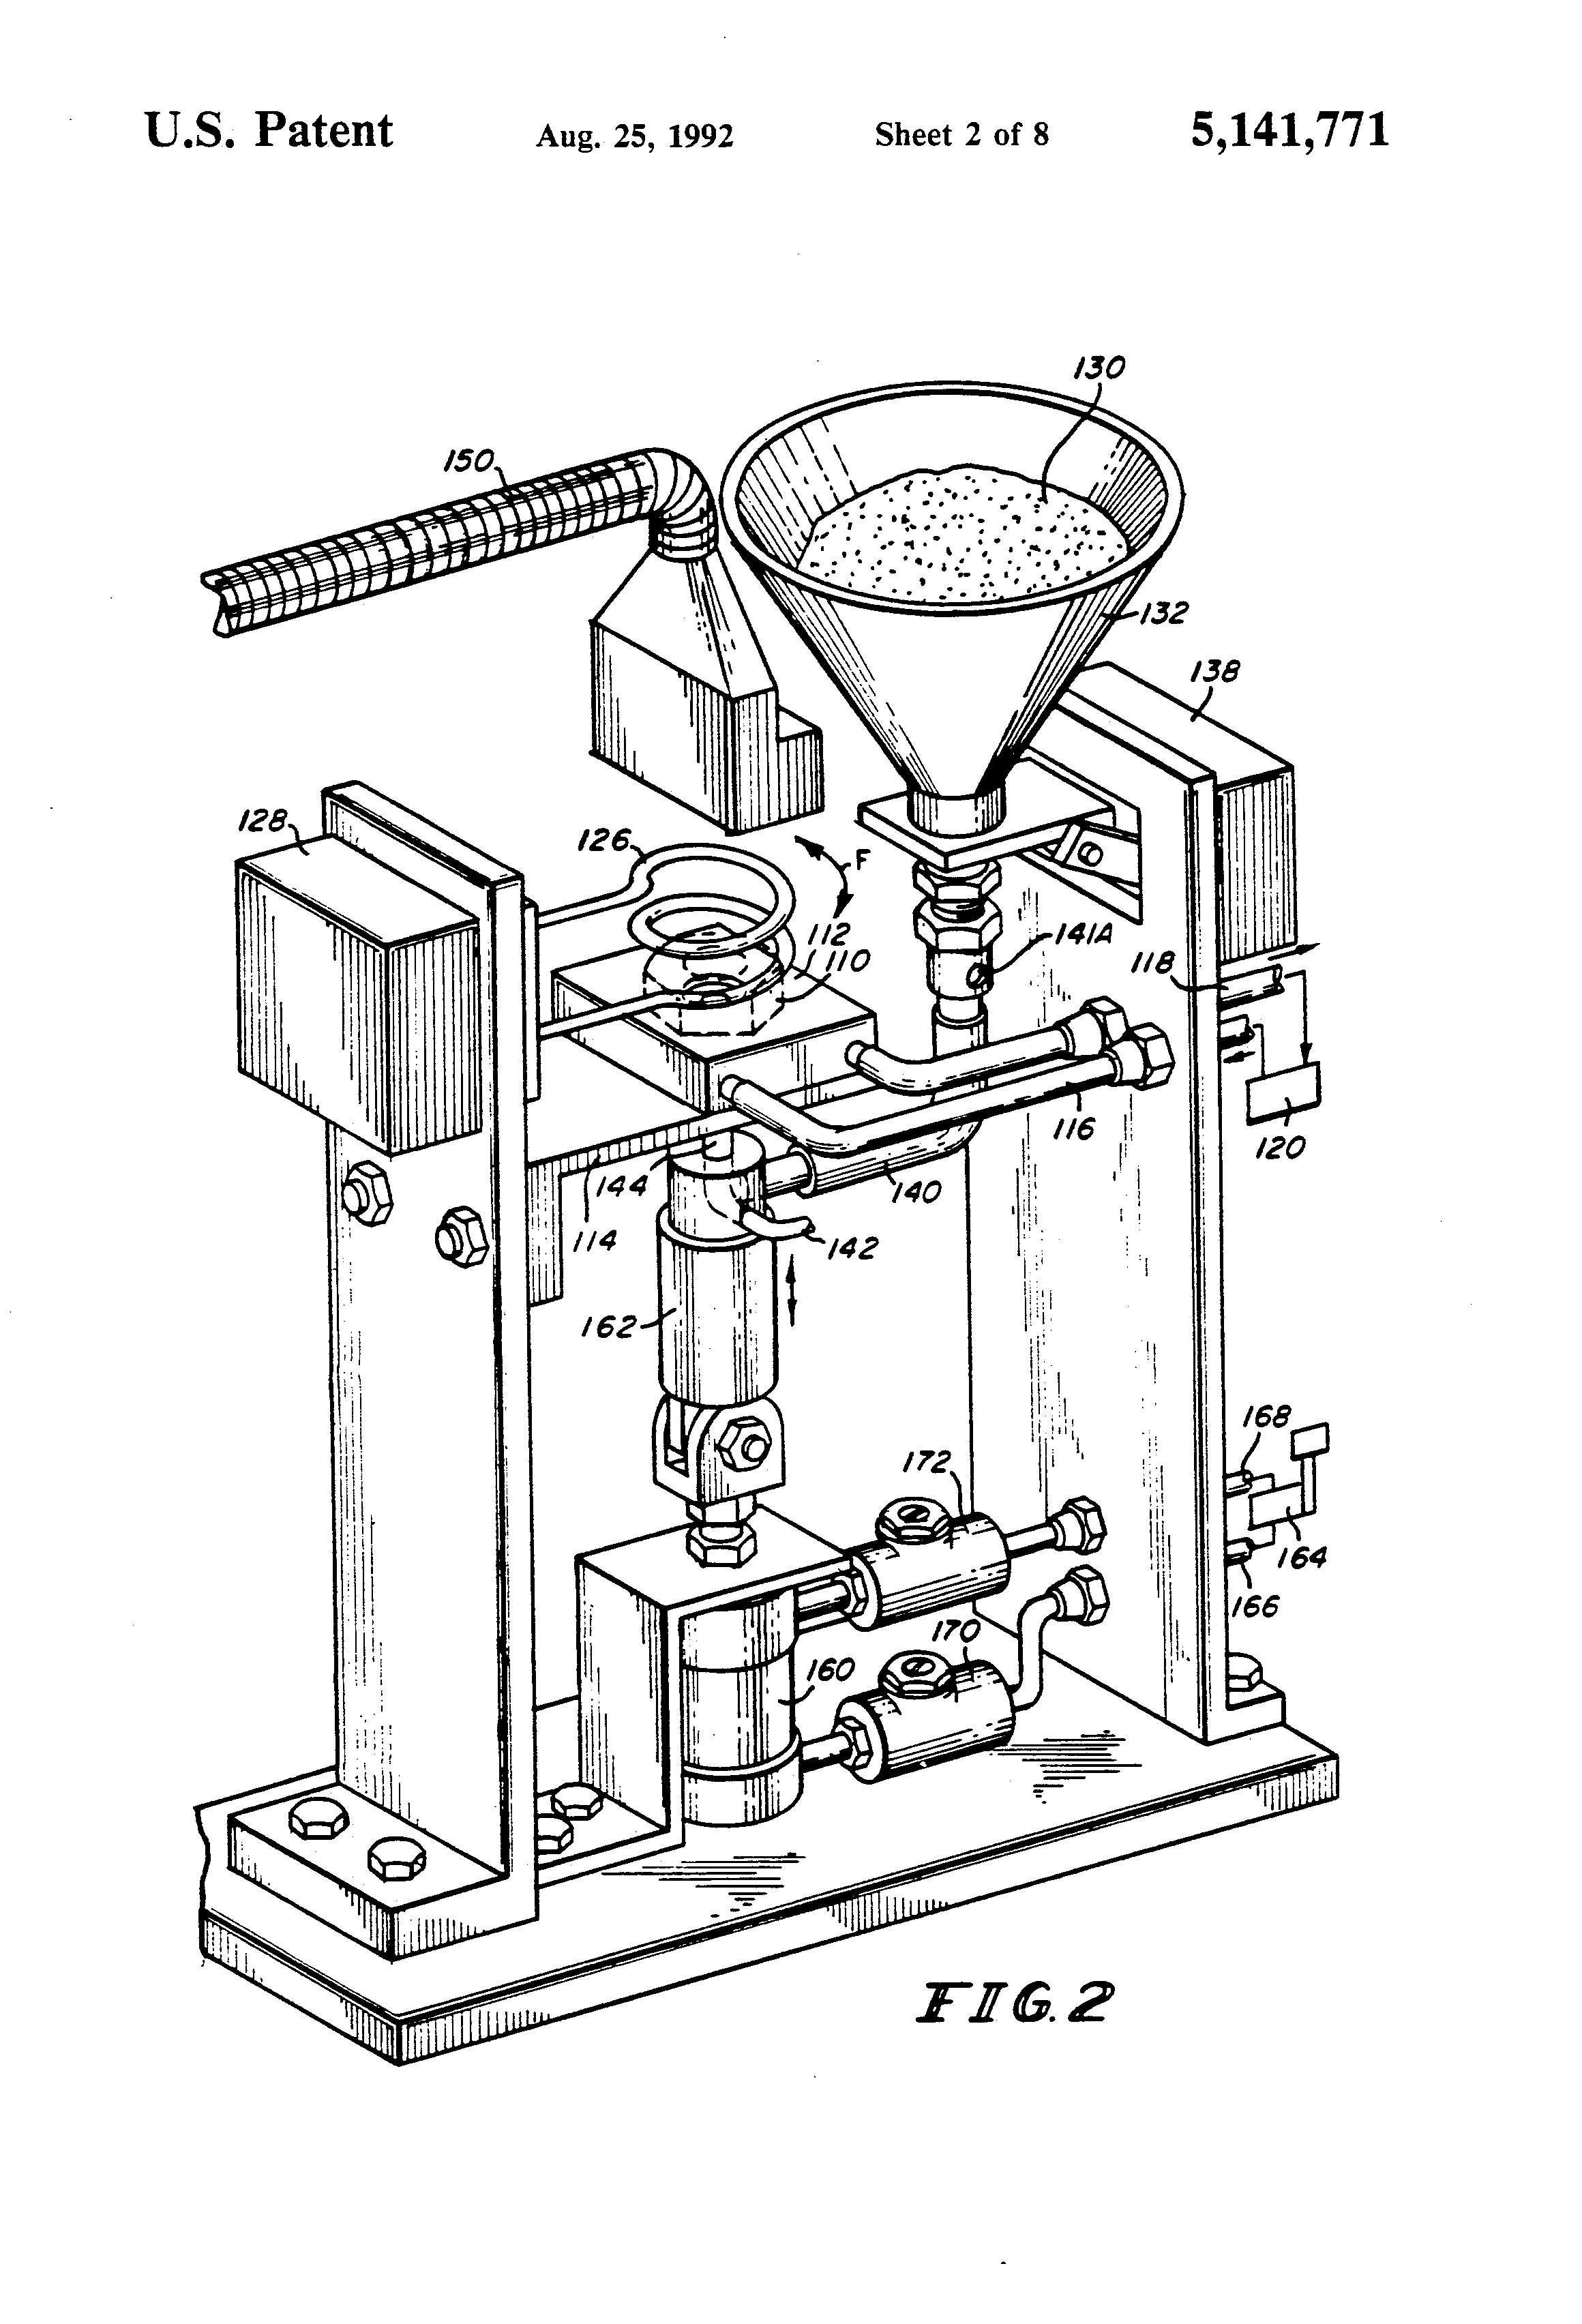 dayton backpack vacuum wiring diagram